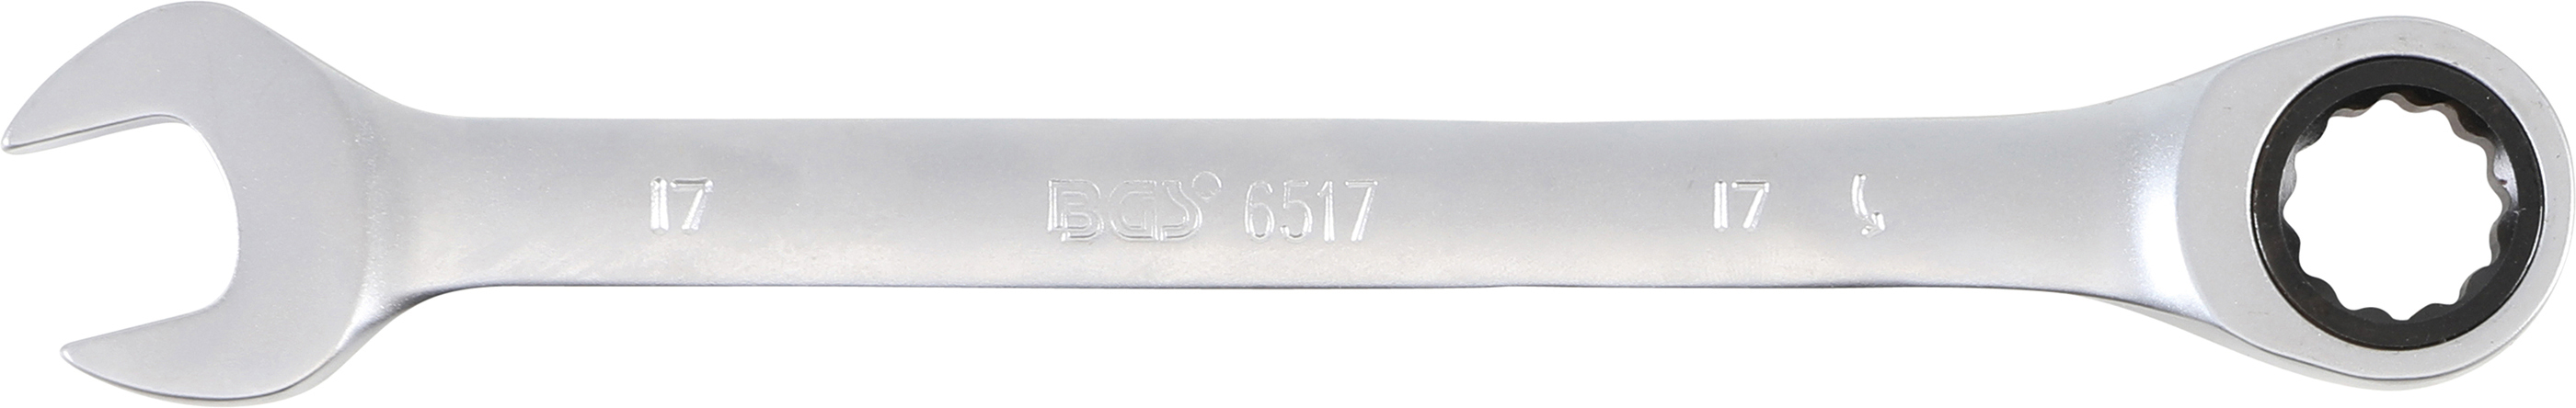 BGS 6517 Cheie combinată cu clichet 17 mm